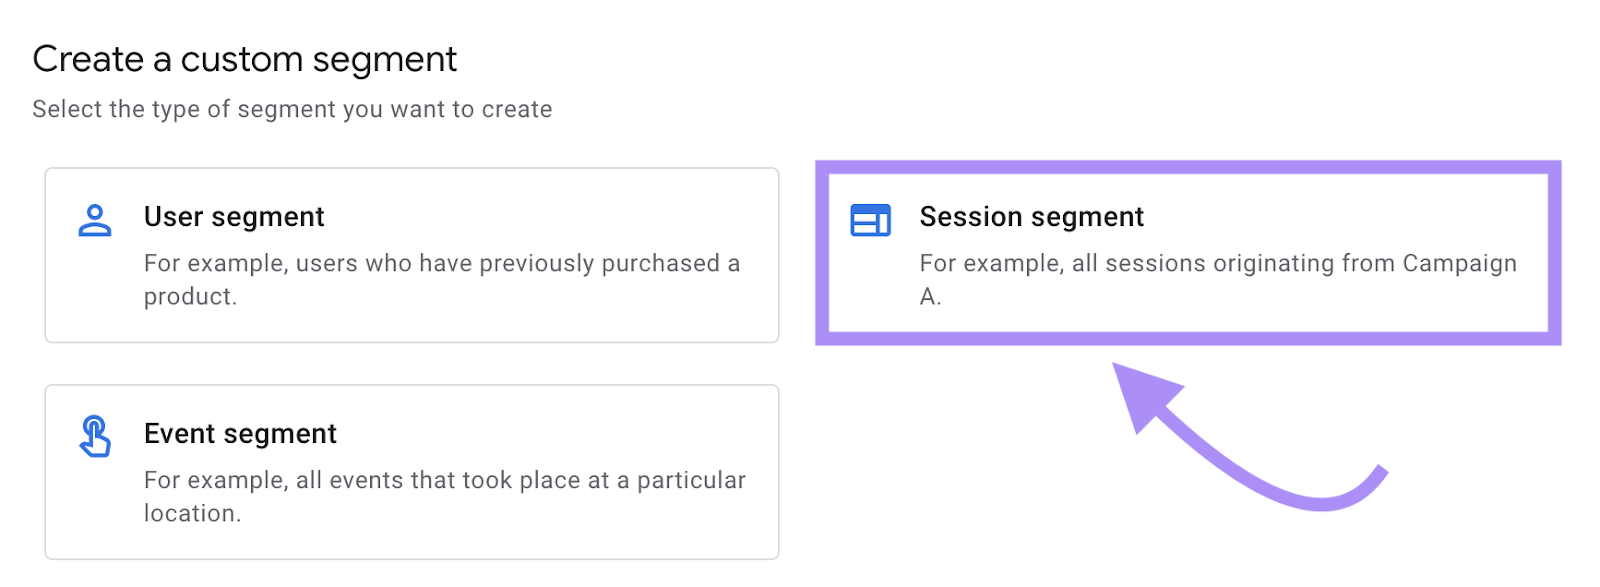 “Session segment” option selected under "Create a custom segment" section